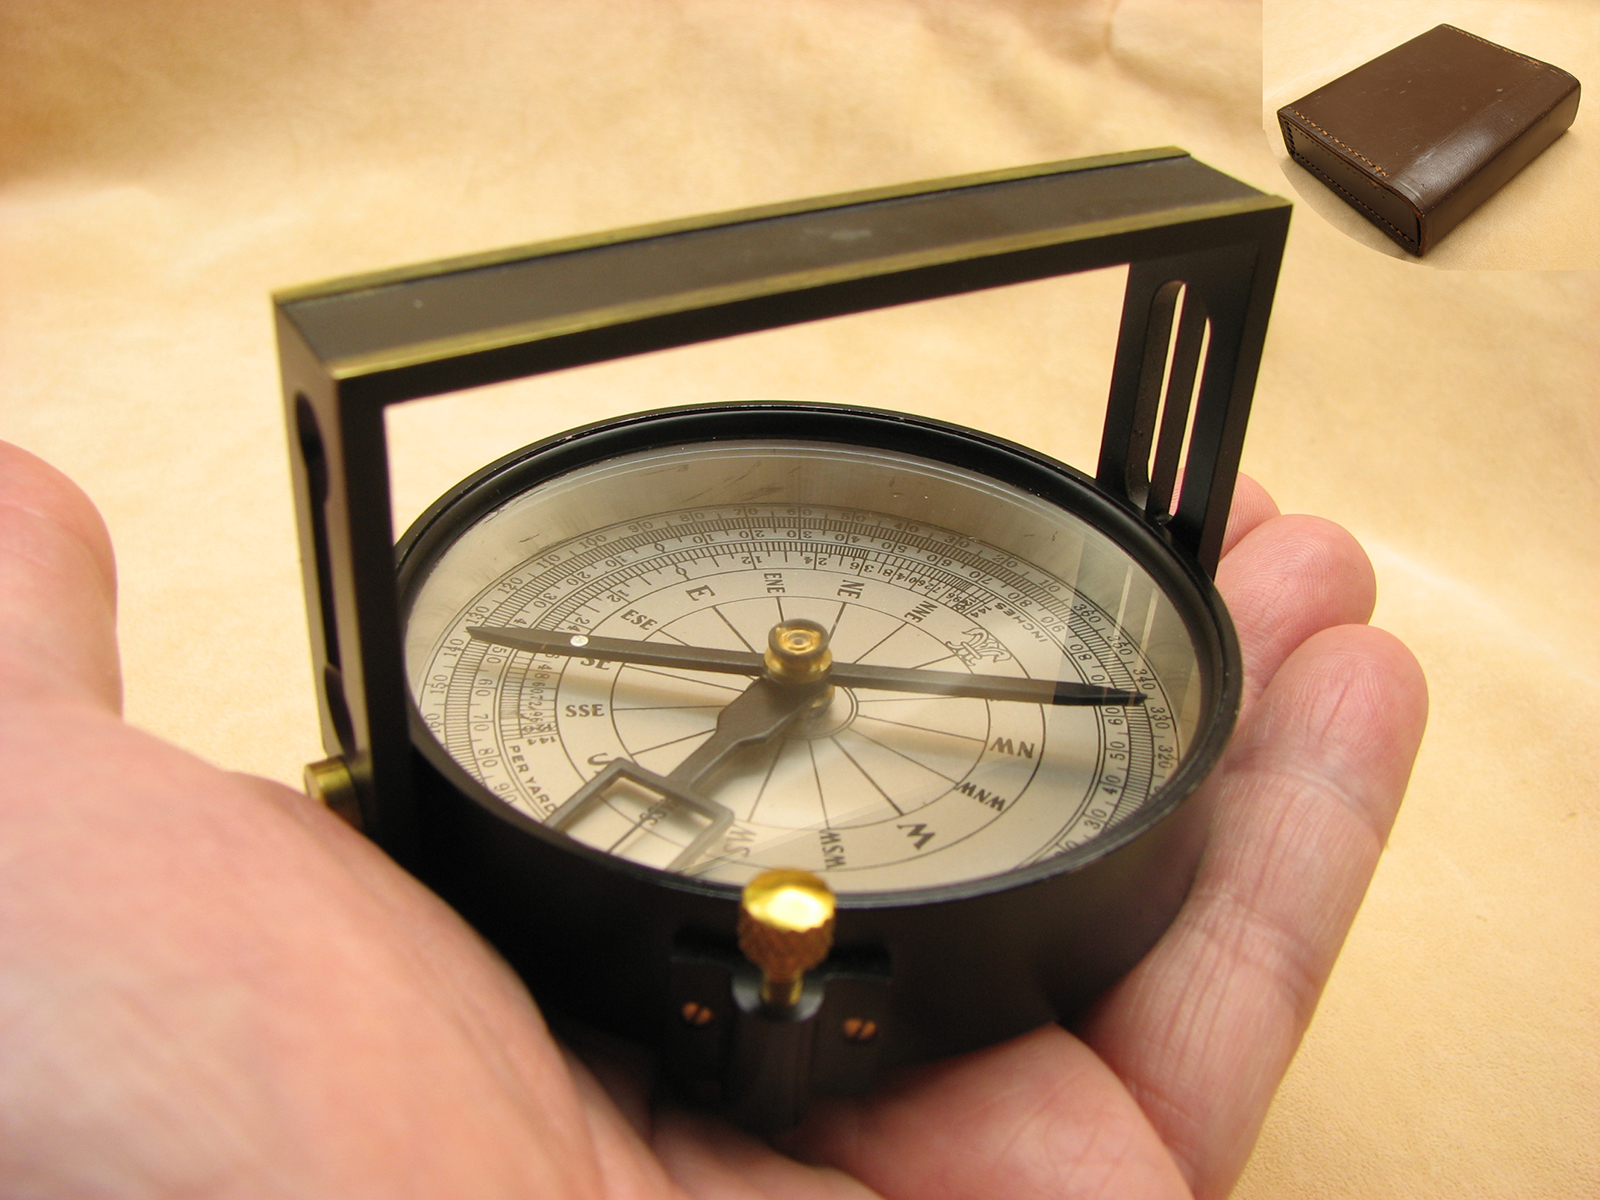 Mid 20th century Francis Barker bridge compass with clinometer